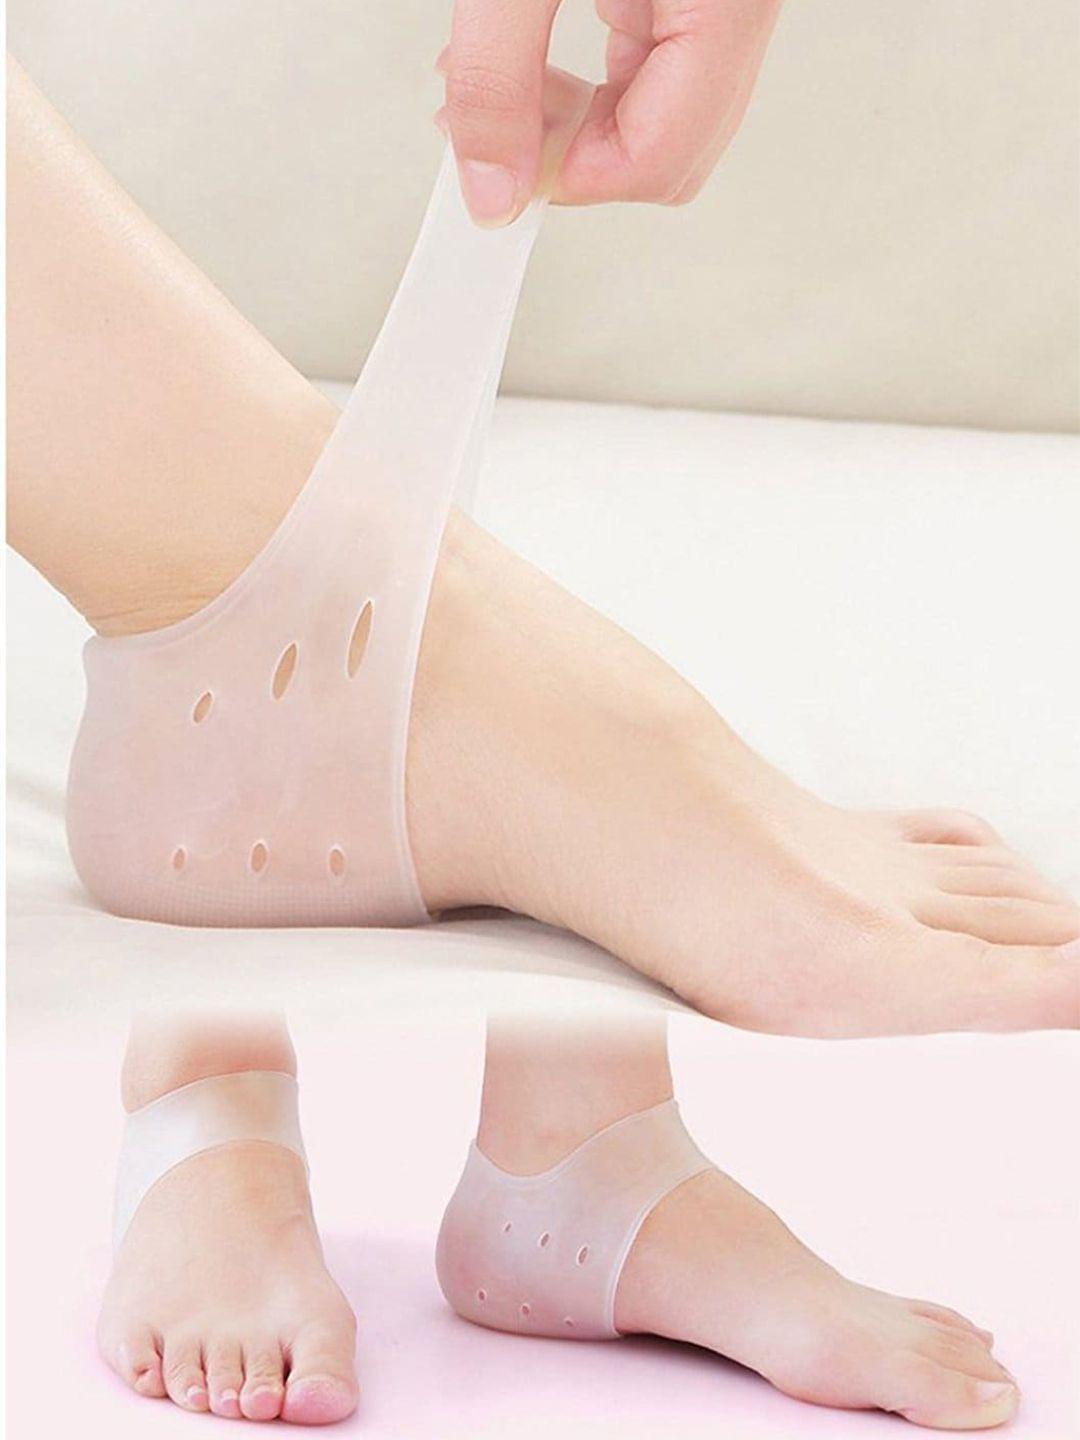 alexvyan half silicone foot care heel pad sock for dry hard cracked repair